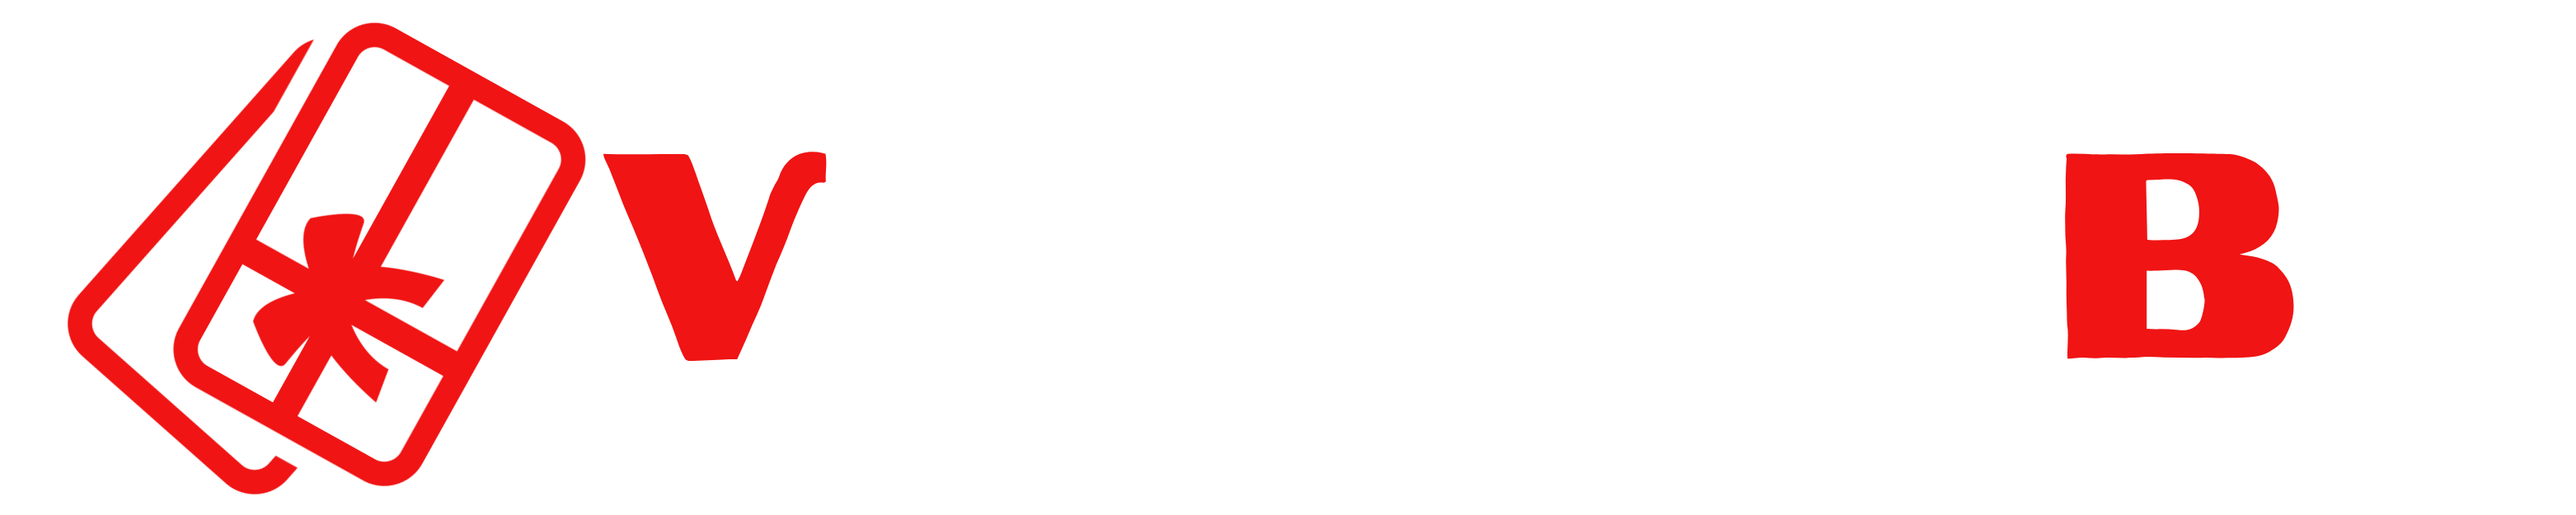 VoucherBD white logo